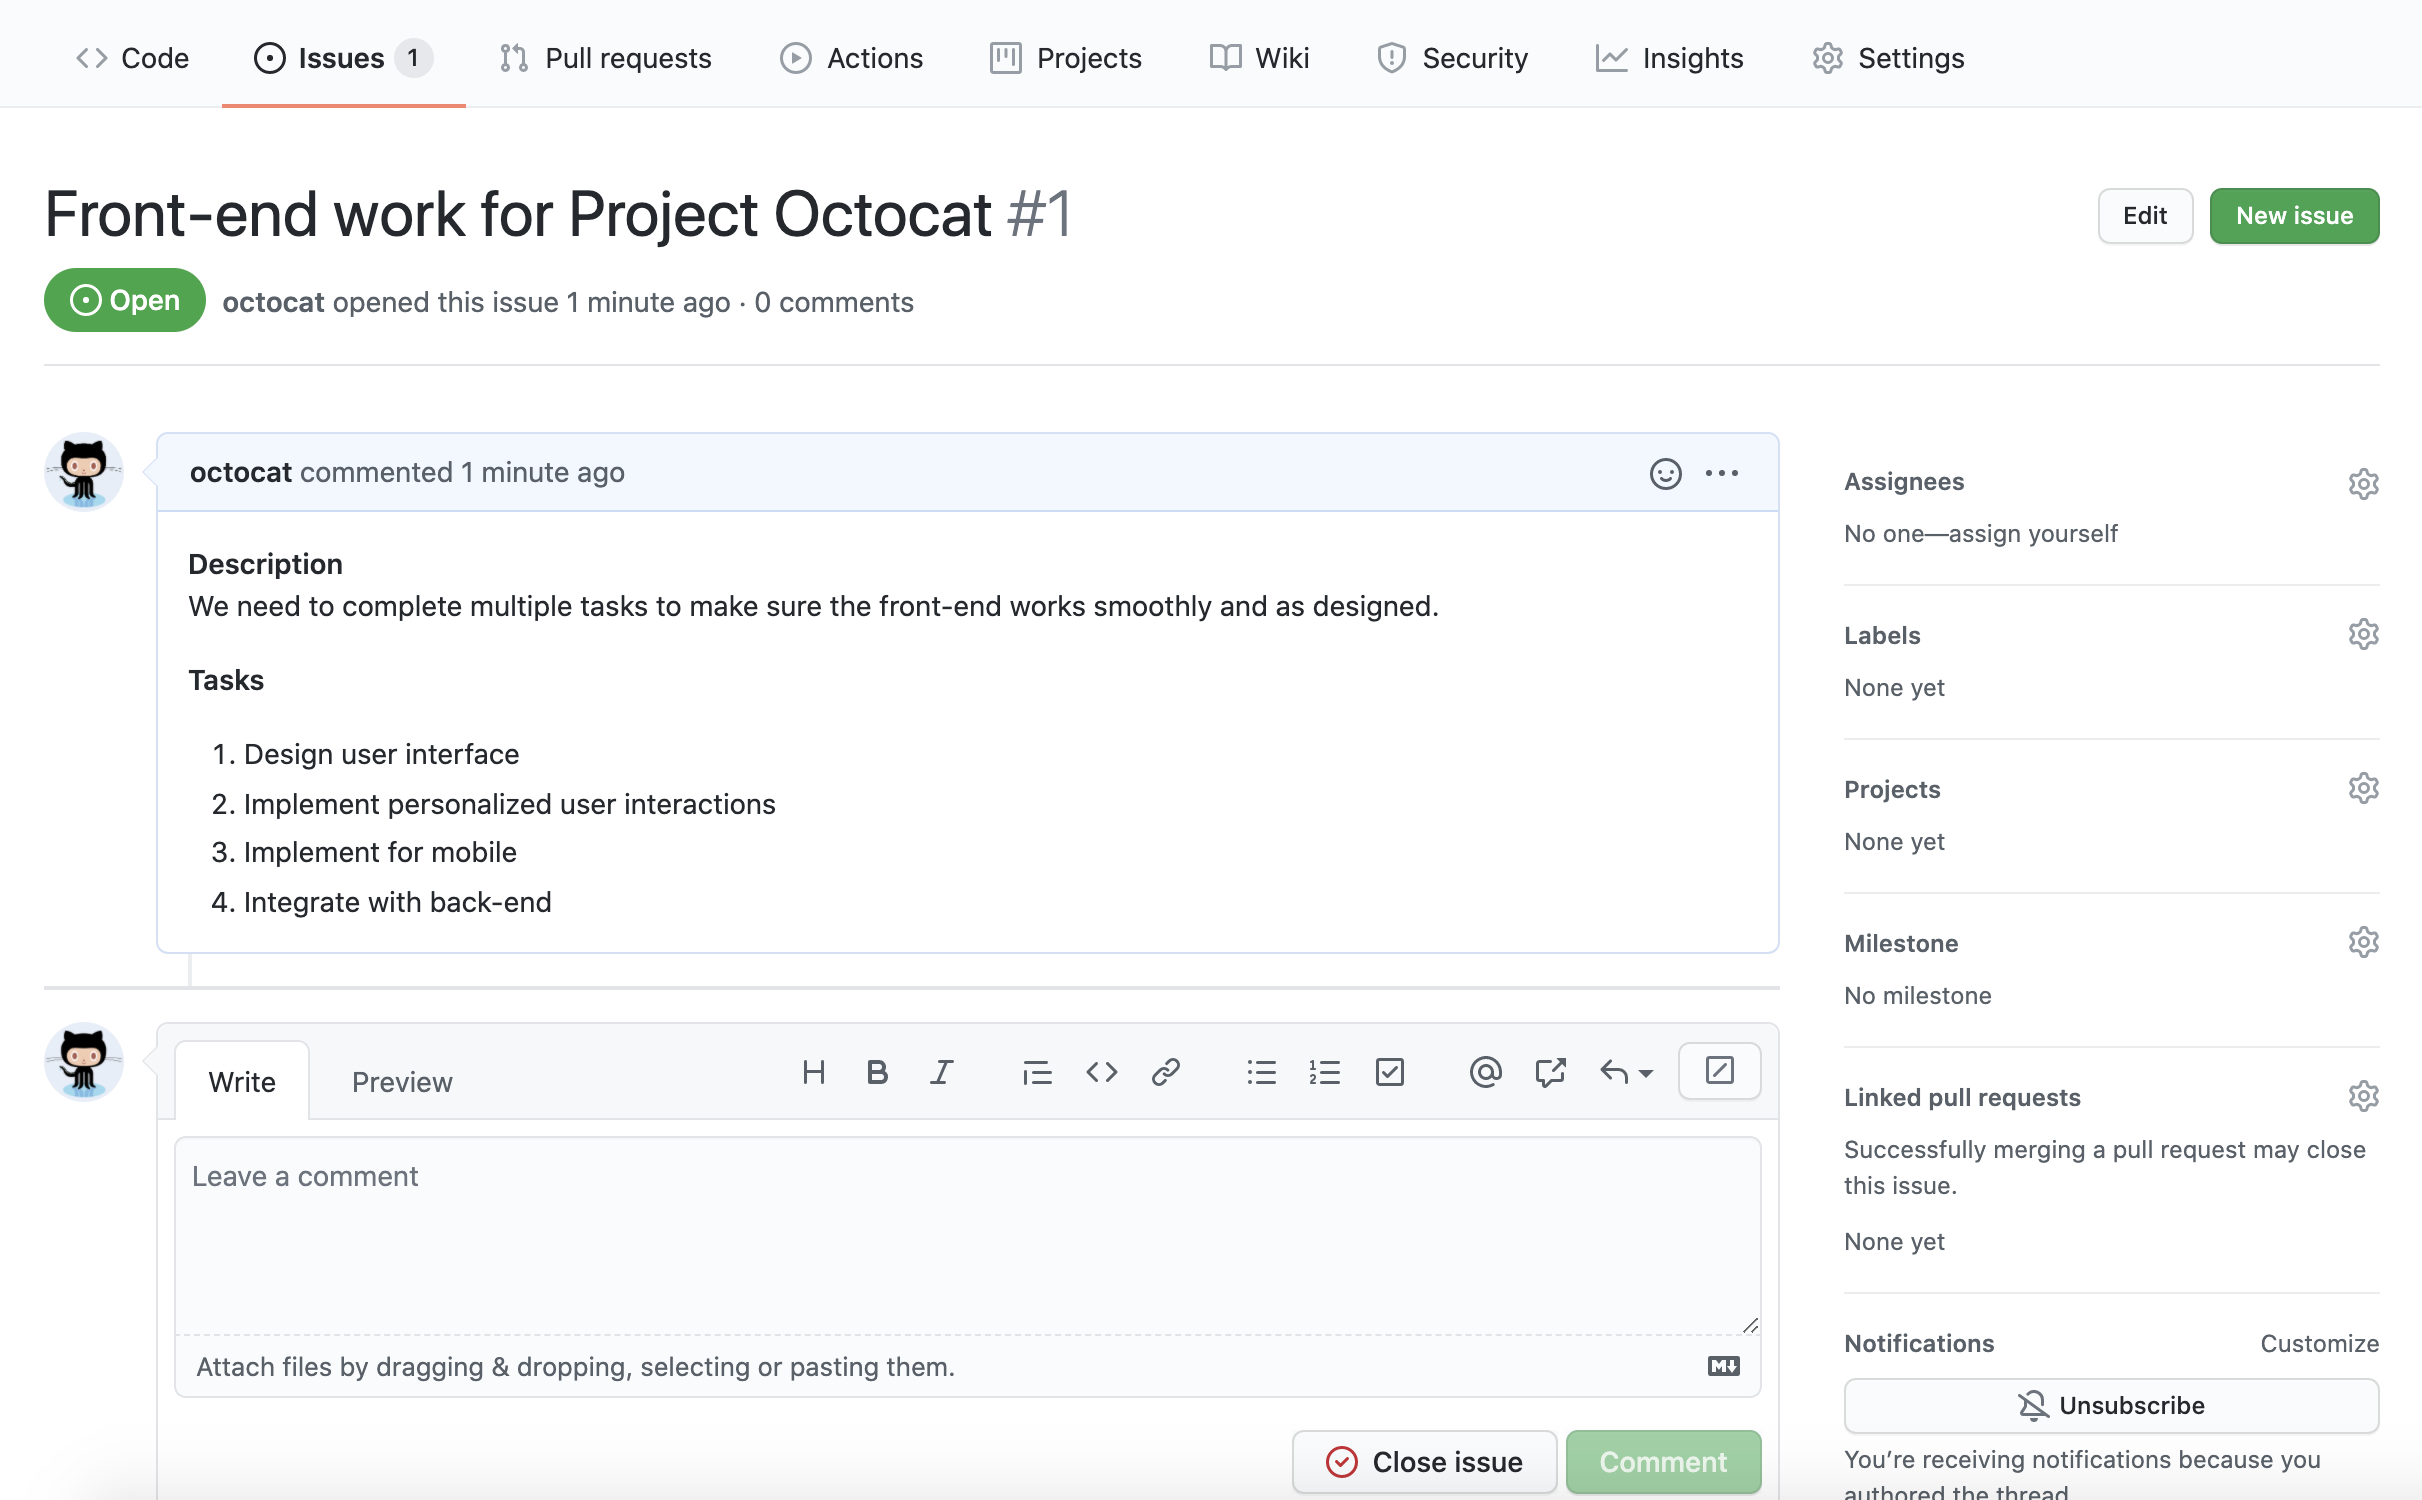 "Project Octocat에 대한 프런트 엔드 작업"이라는 문제의 스크린샷 문제 본문에는 완료할 작업 목록이 포함됩니다.